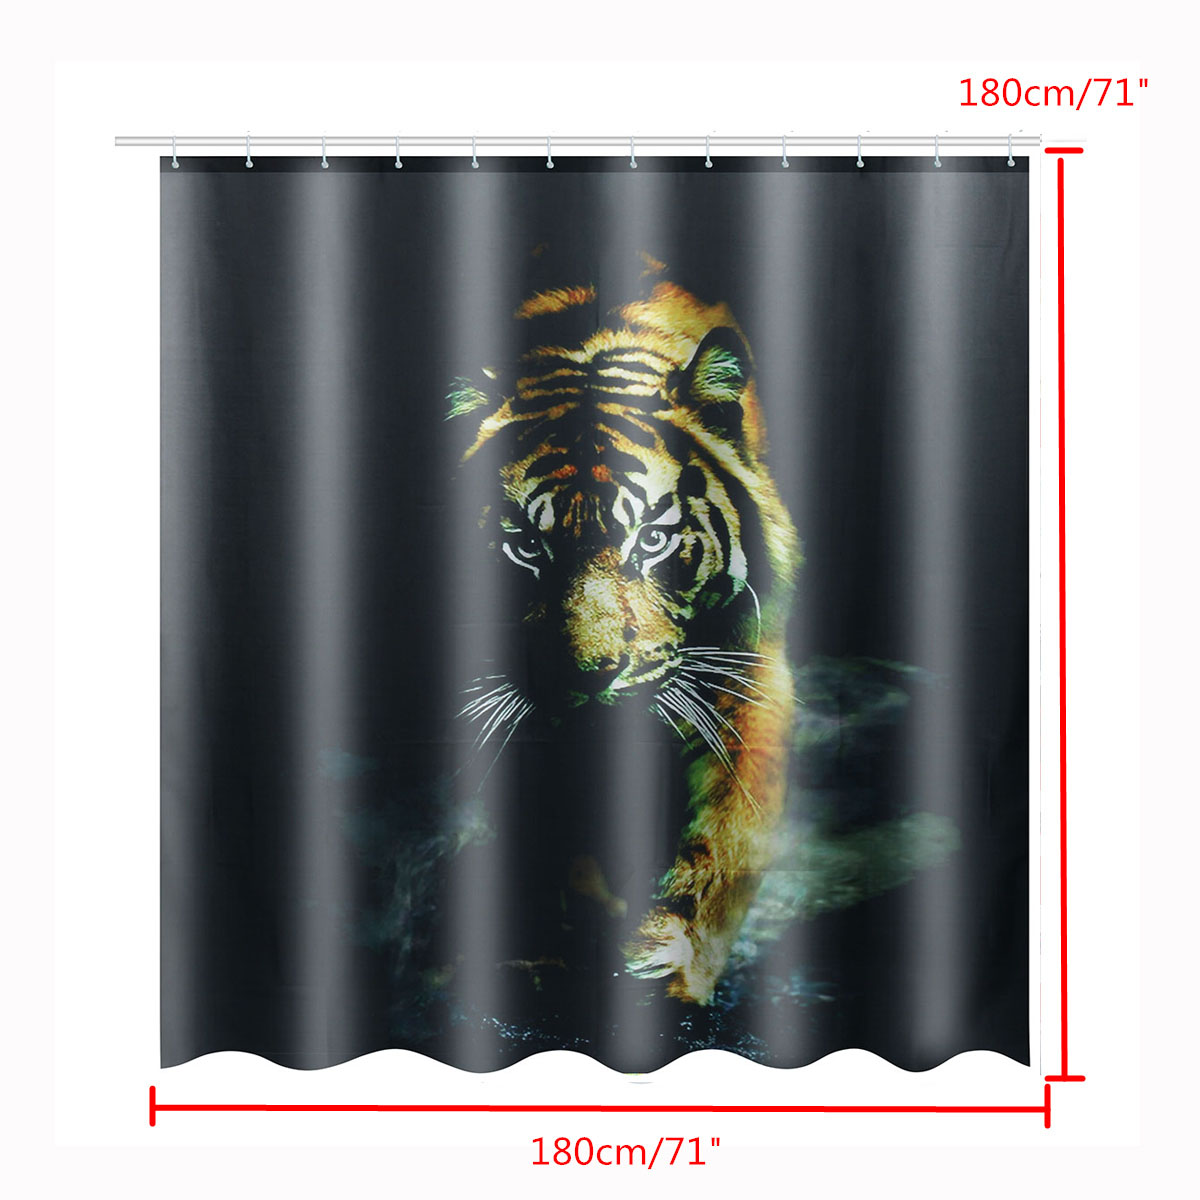 72quotX-72quot-Wildlife-Animal-Nature-Decor-Tiger-Bathroom-Decor-Shower-Curtain-with-Plastic-Shower--1421519